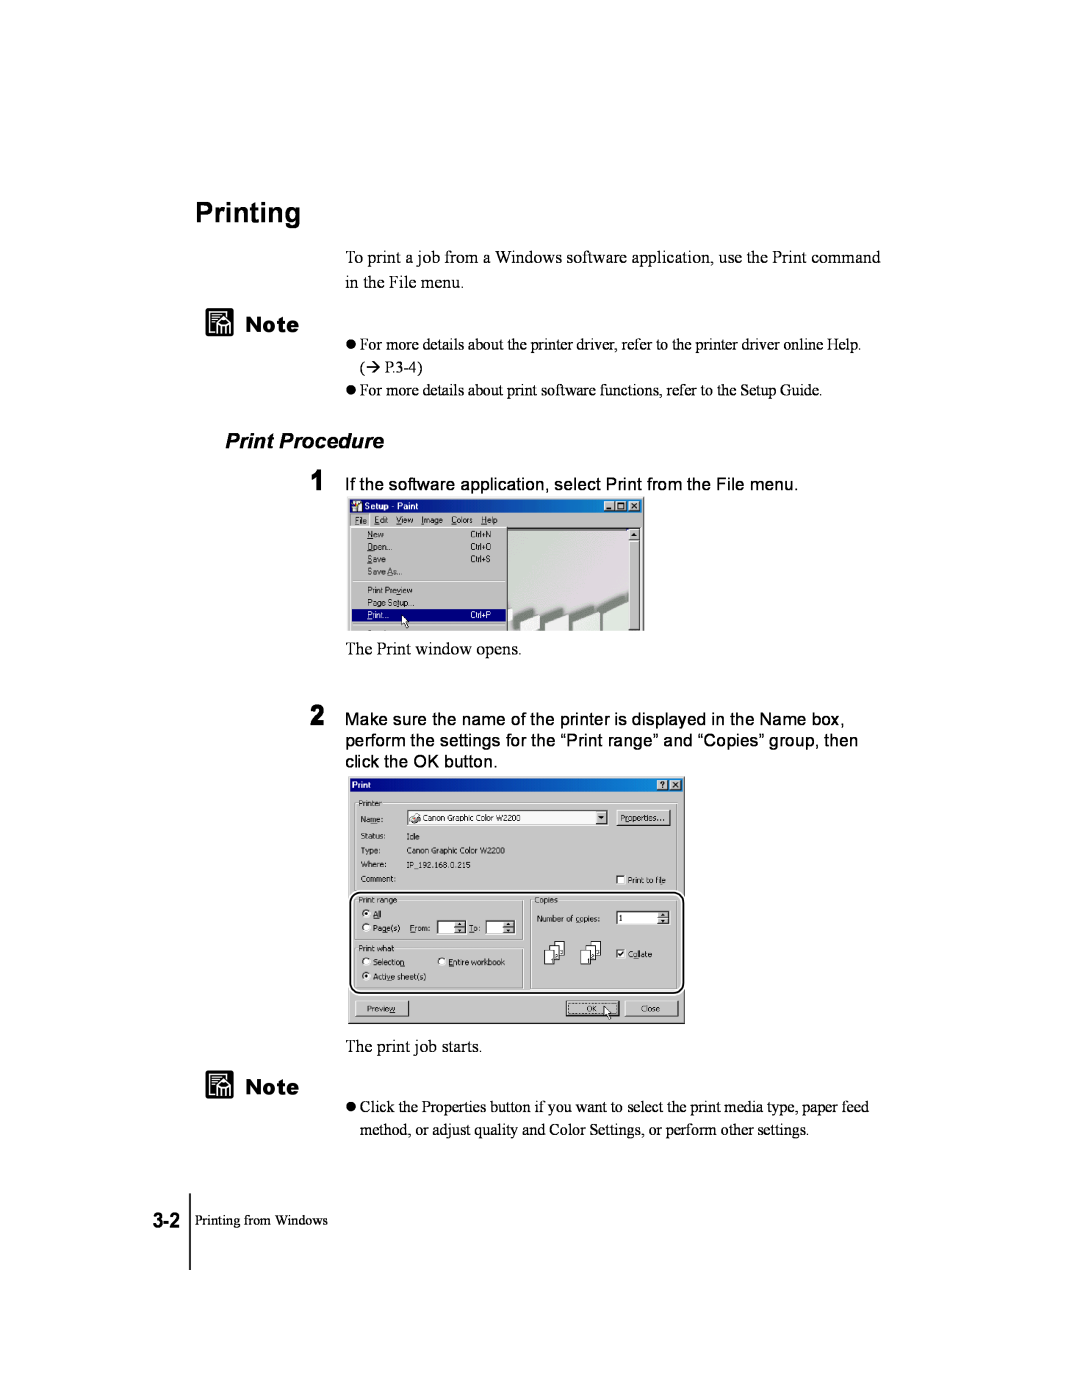 Canon W2200 manual Printing, Print Procedure 